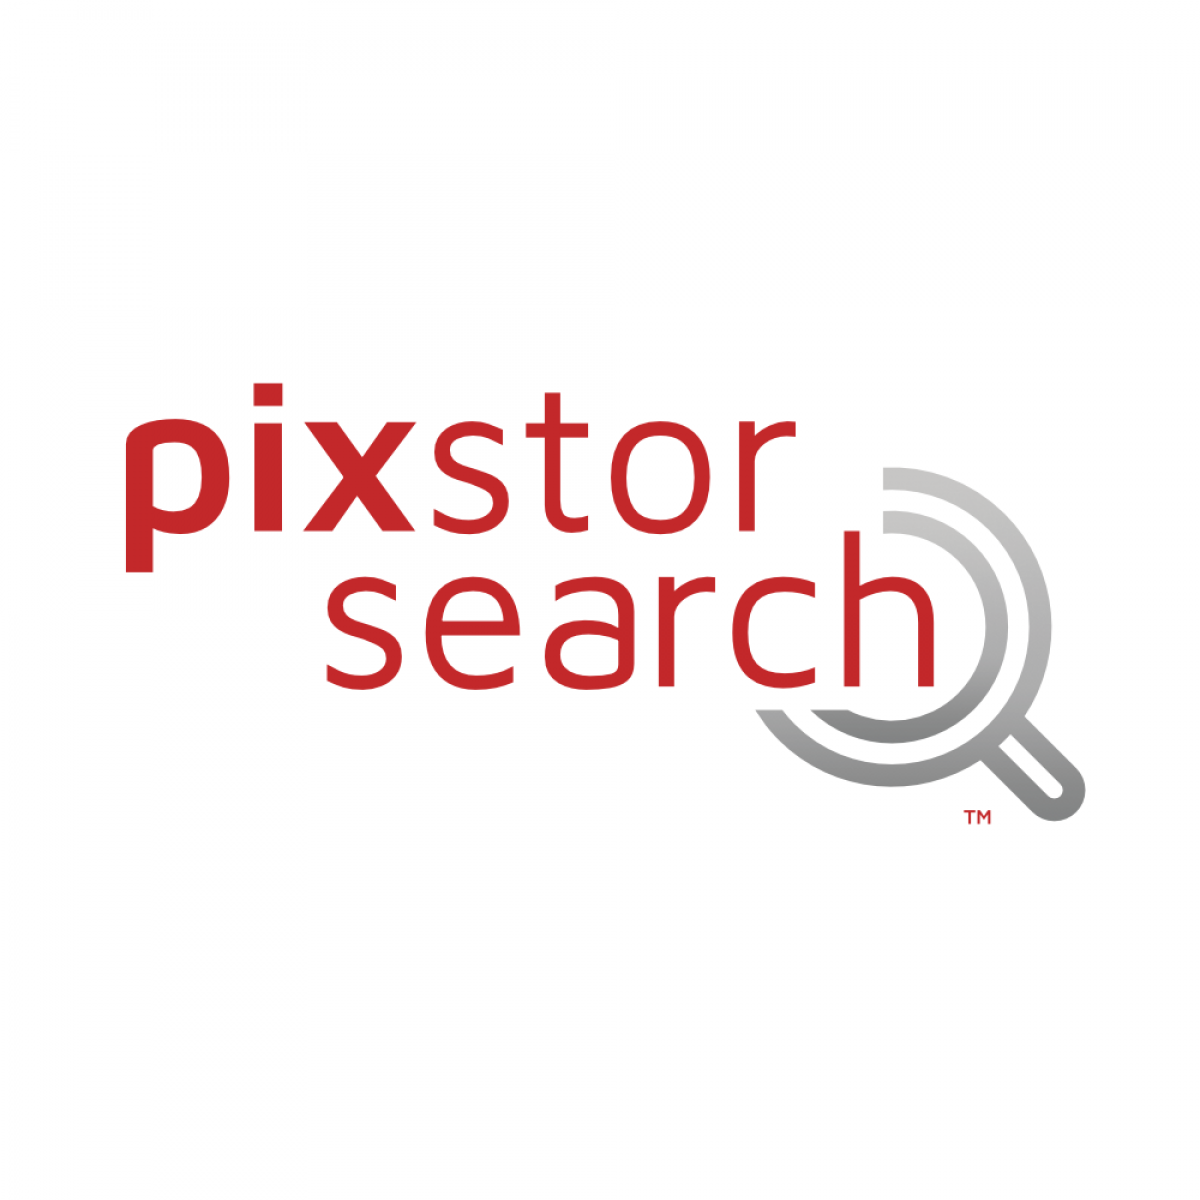 PixStor Search